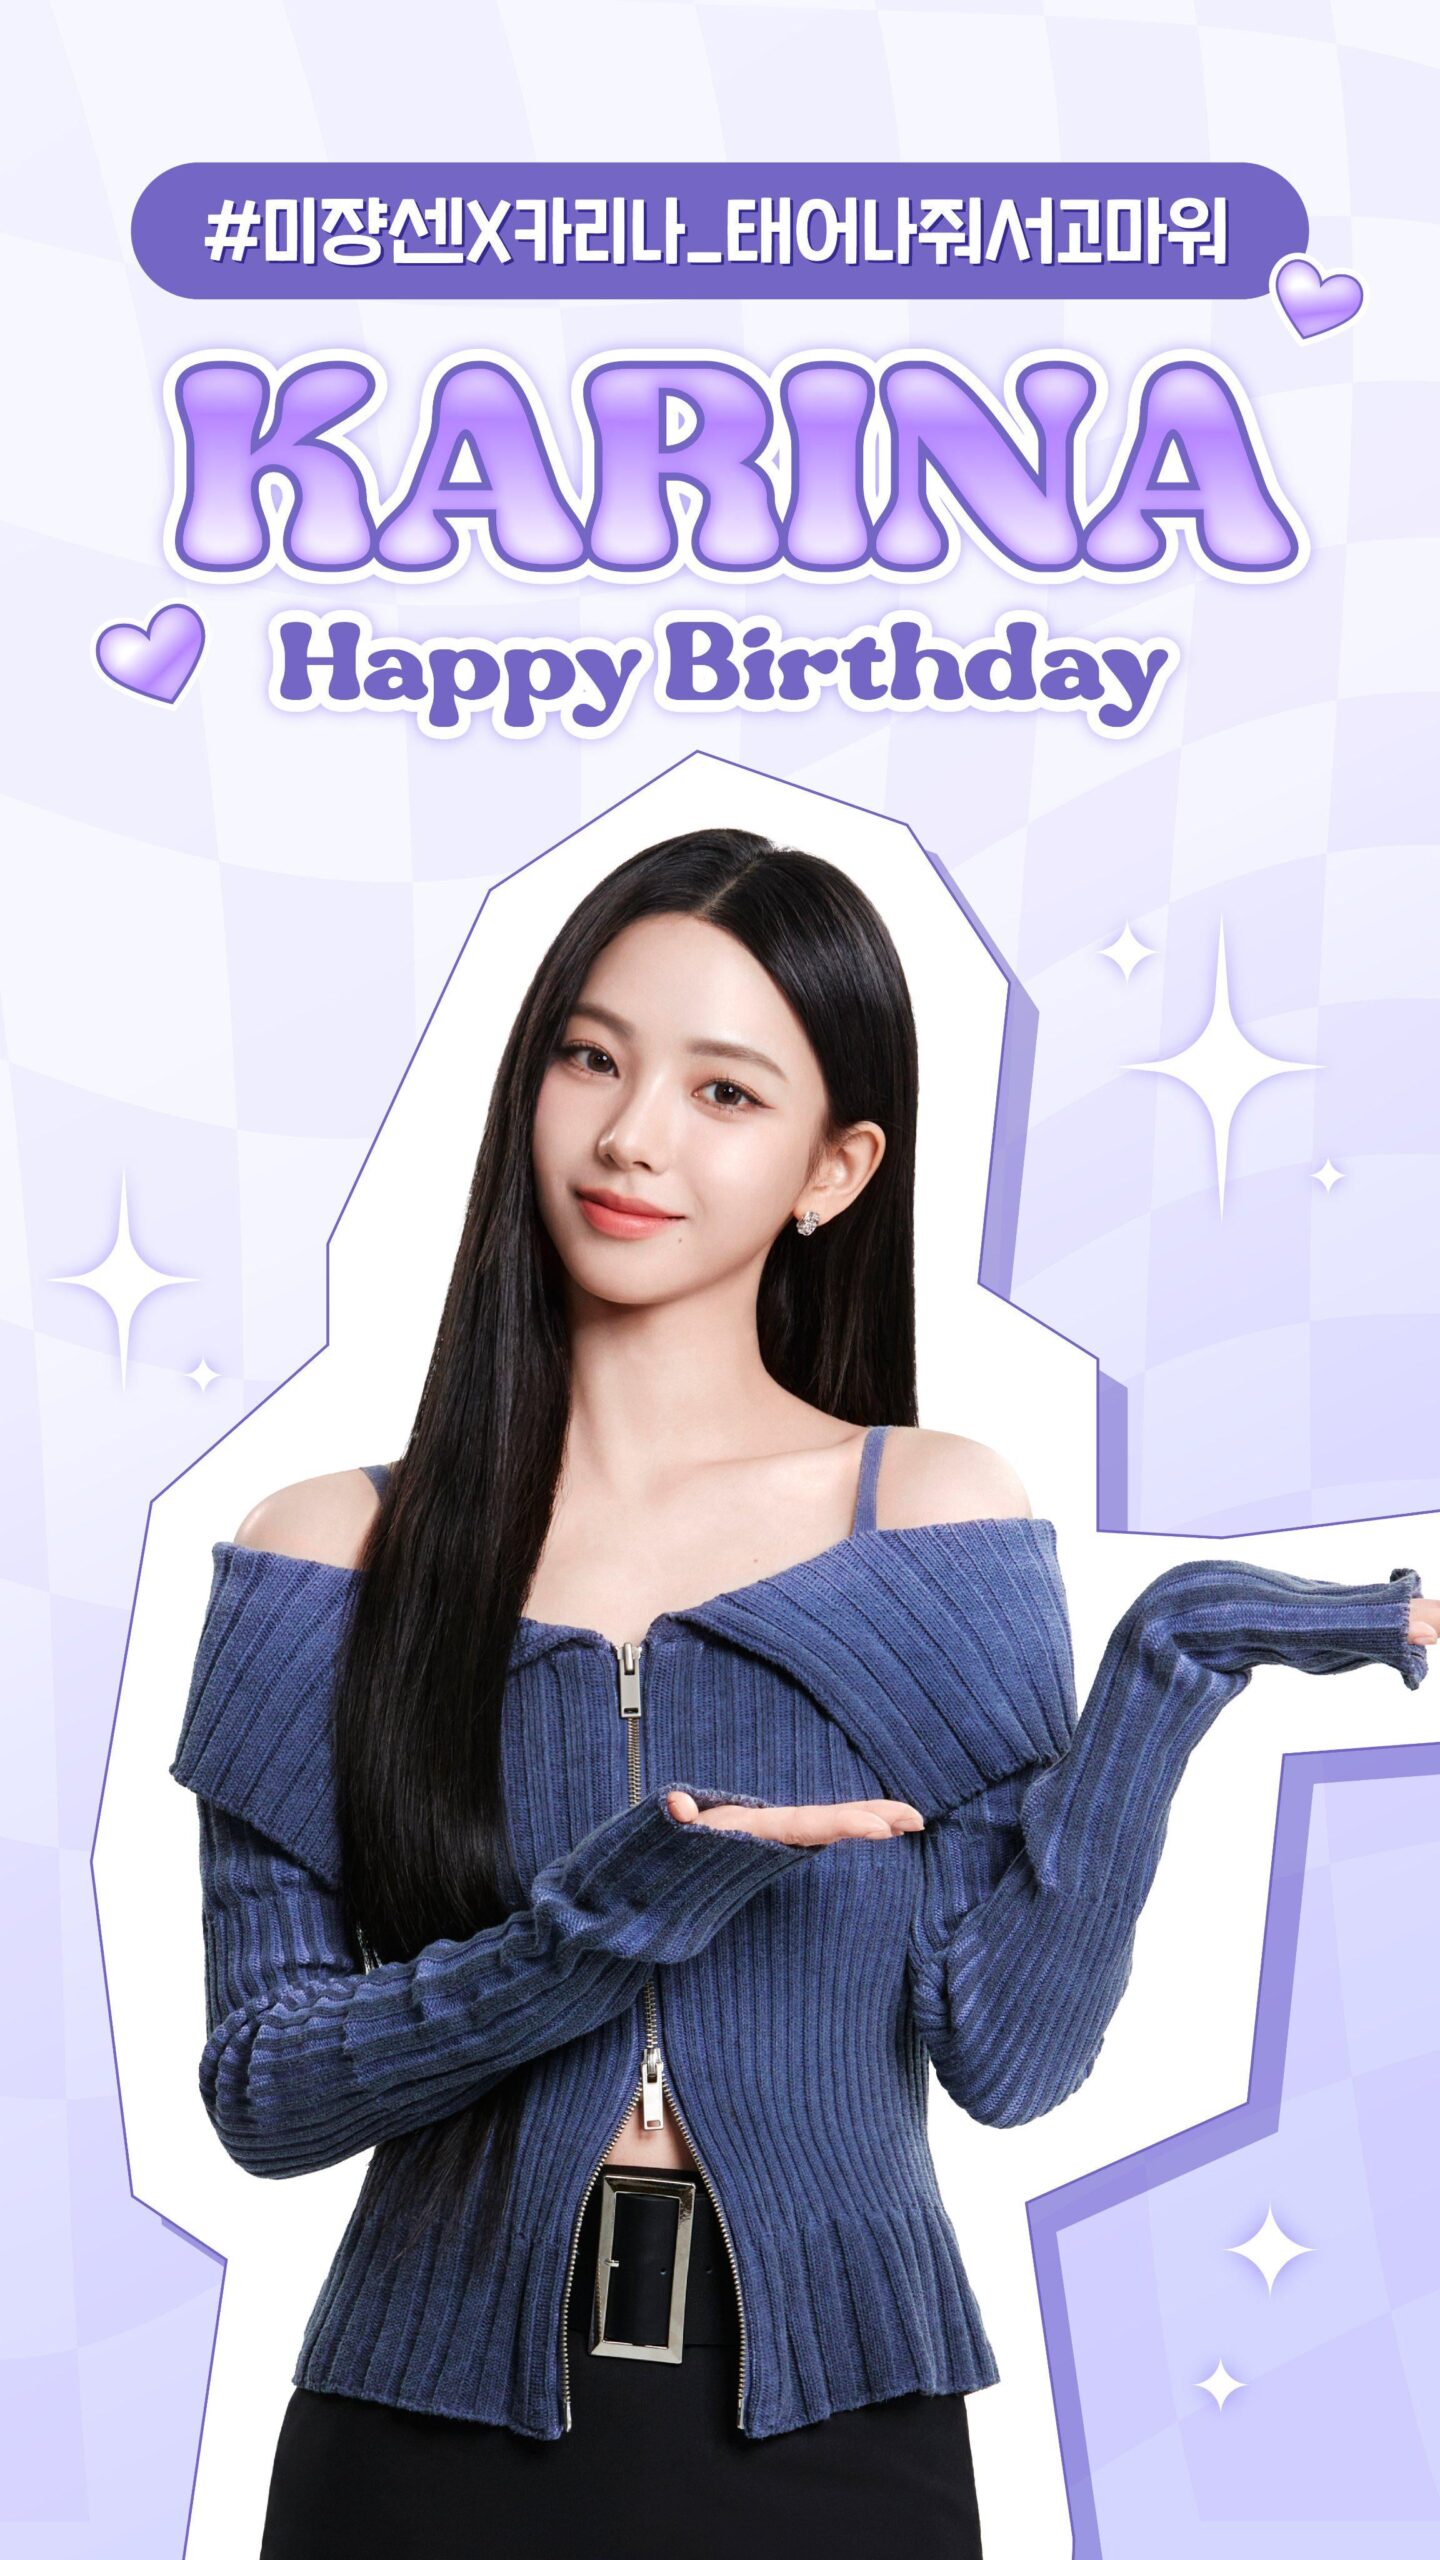 240411 mise en scène Korea Twitter Update with Karina - Happy Birthday Karina on April 11th